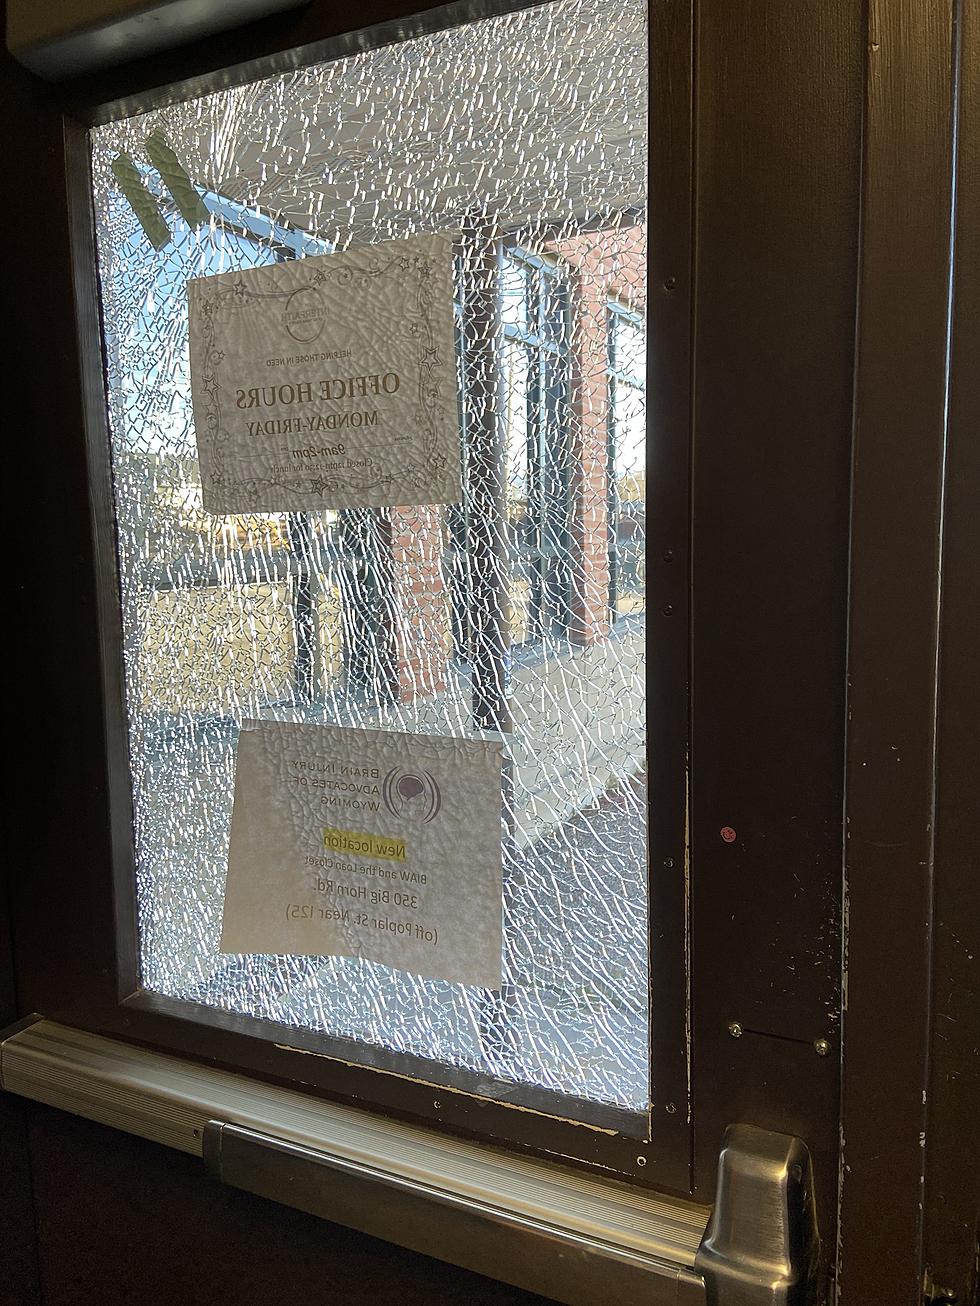 Casper Housing Authority Reports More Vandalism at Former Roosevelt High School